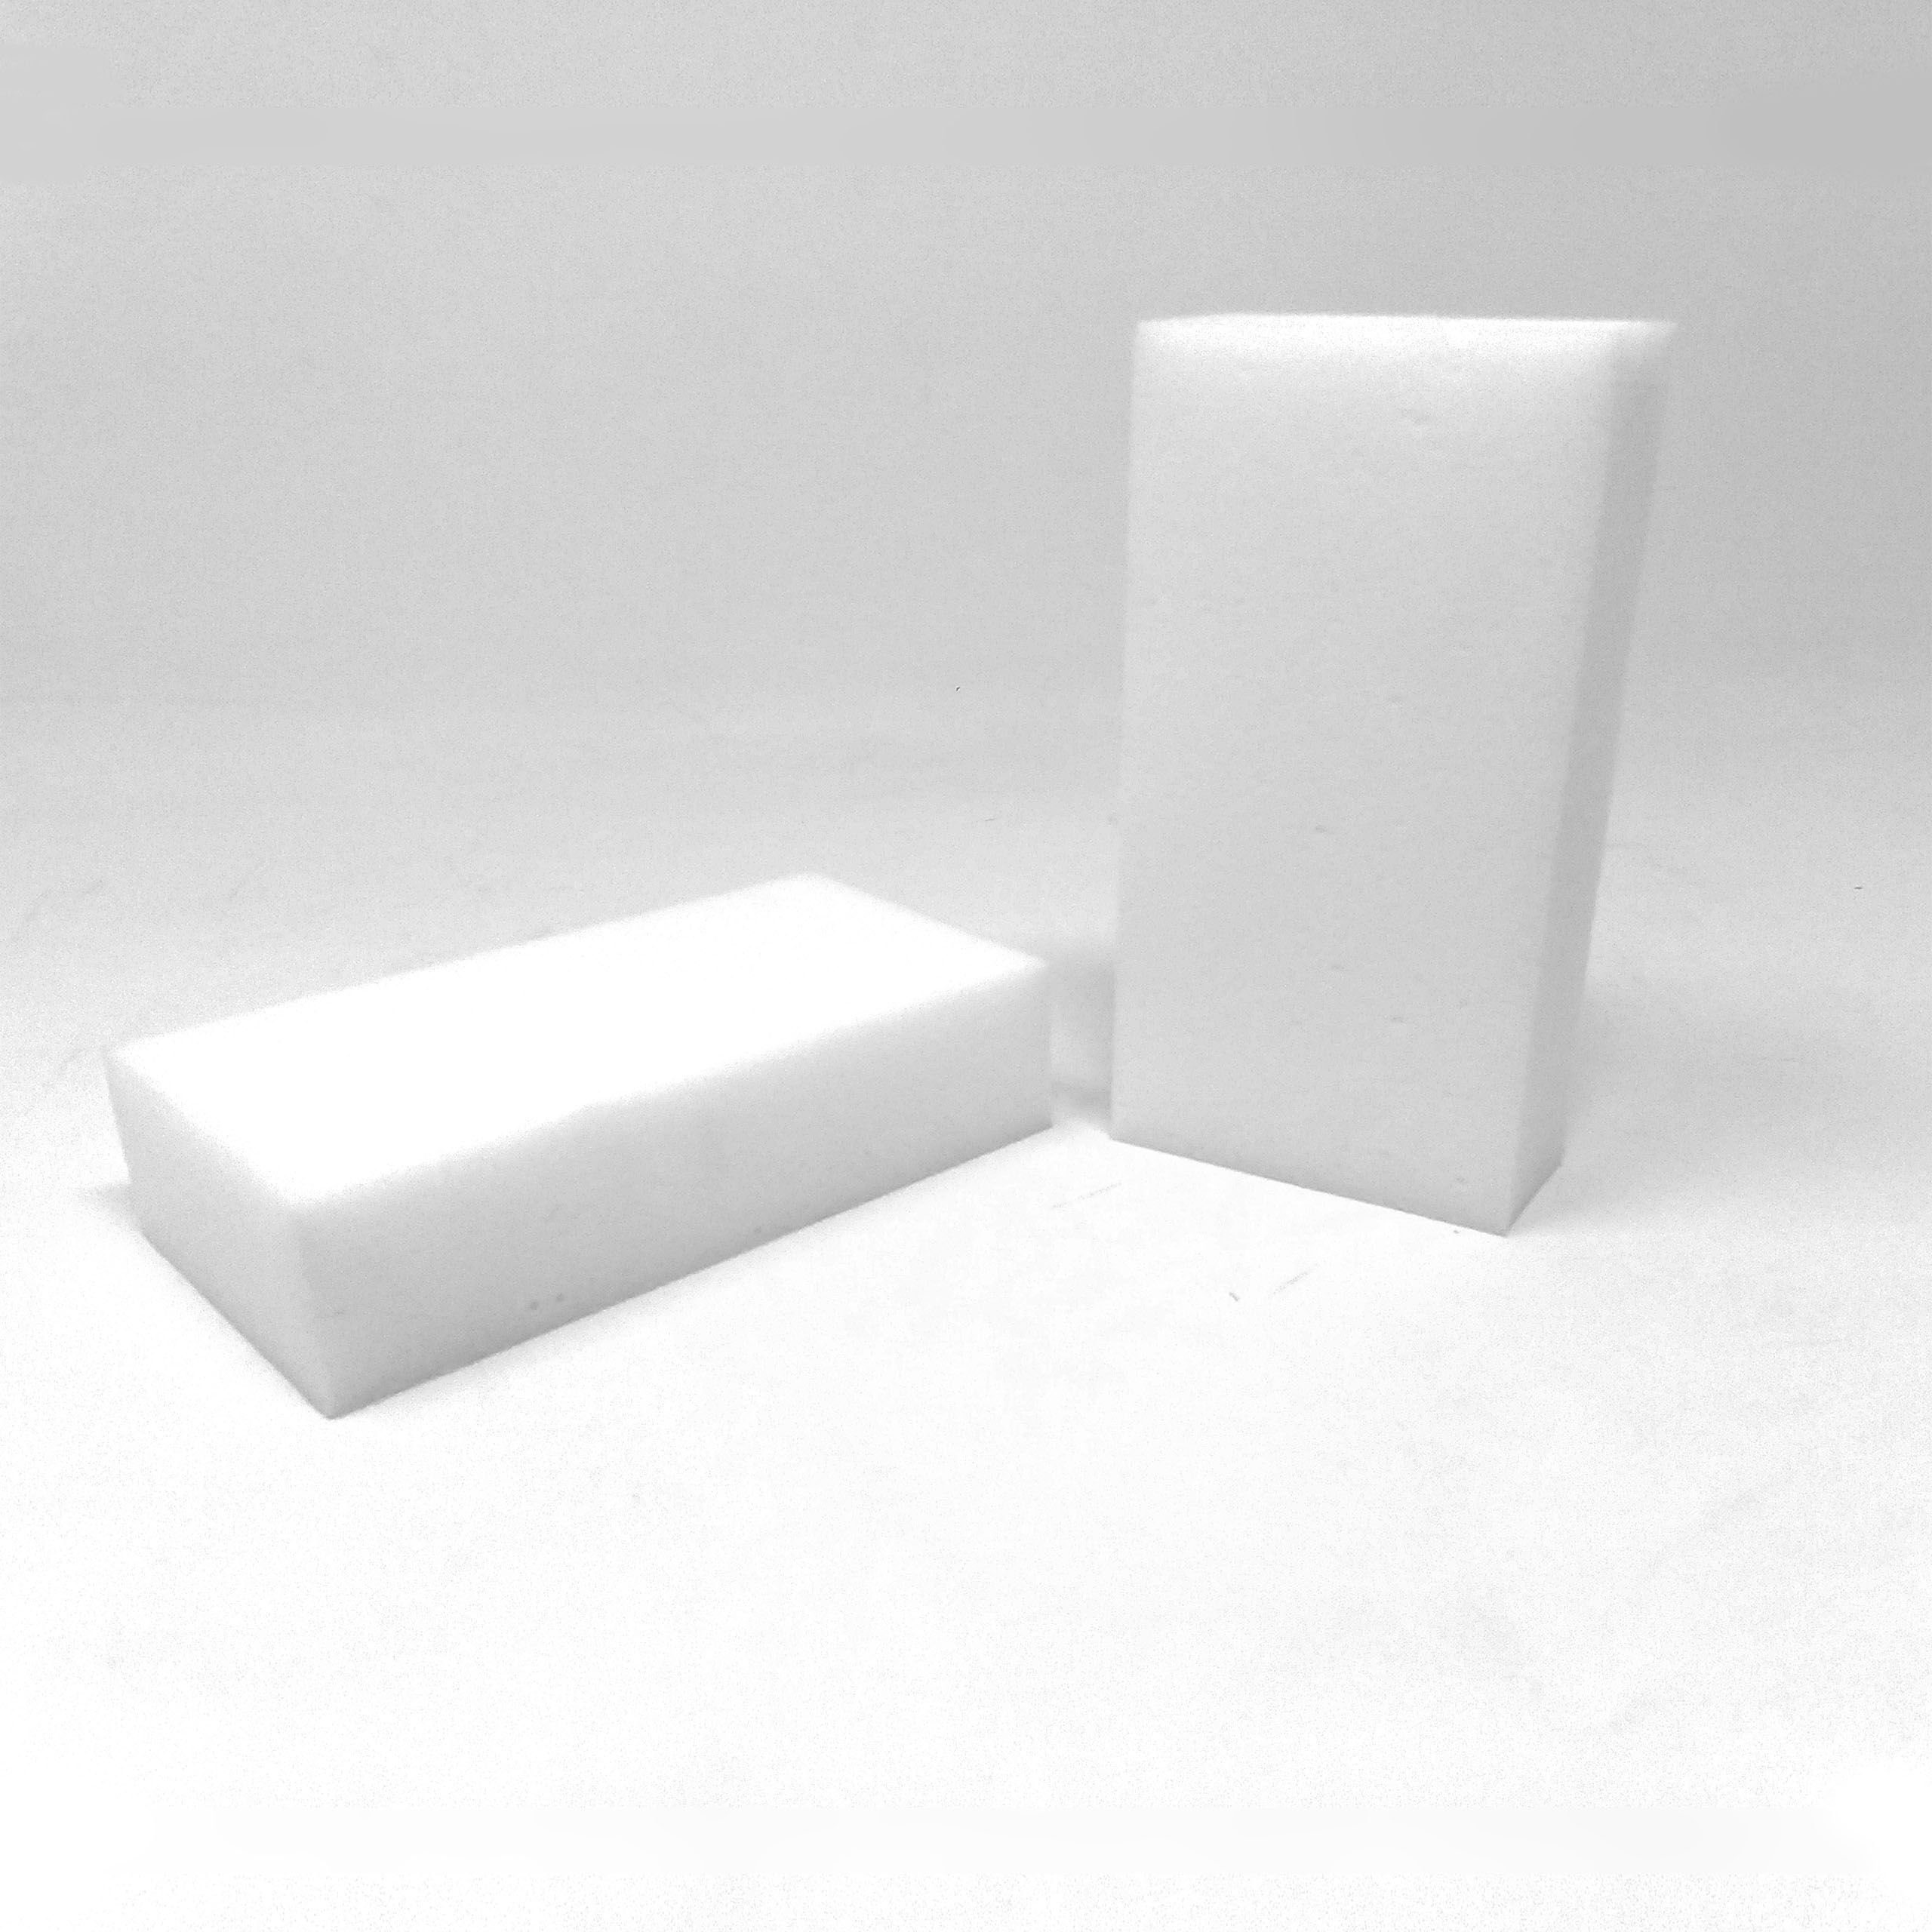 Instant Erase Extra Large Melamine Eraser Sponges (21pk) 2 ponges one standing upright, the other lying down